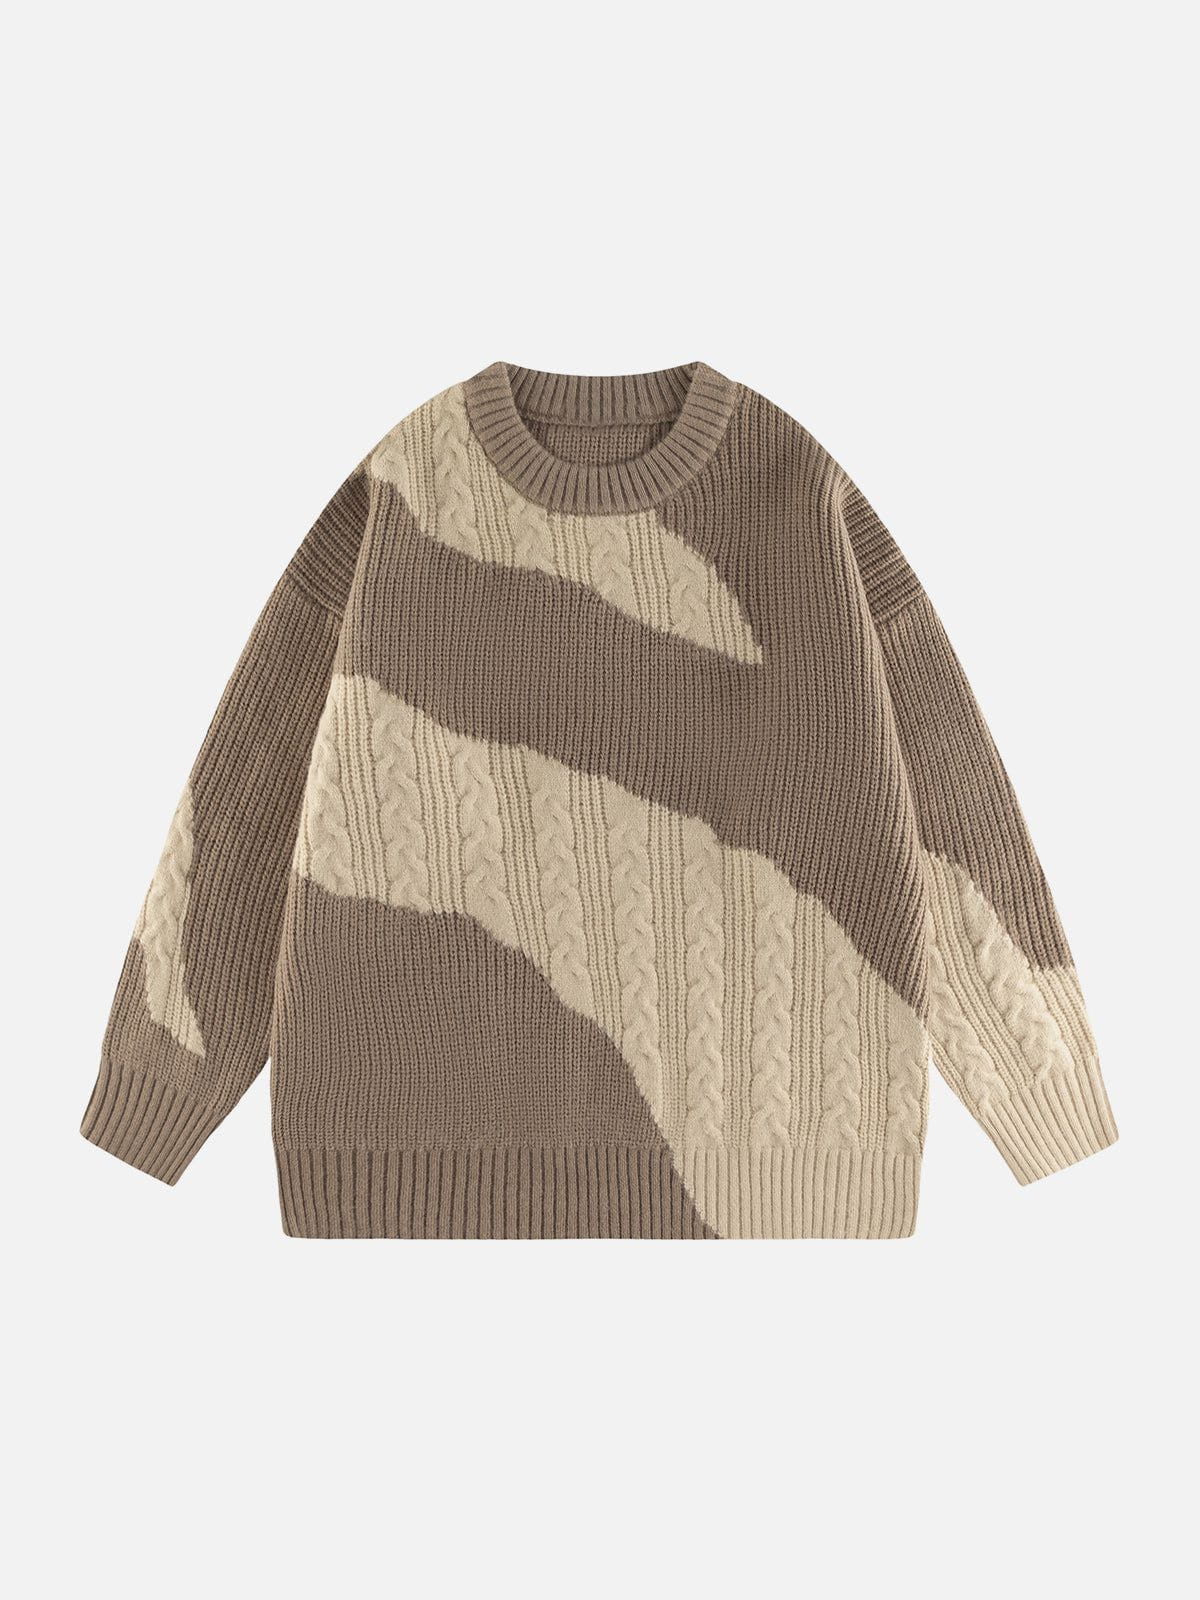 Contrast Irregular Design Knit Sweater